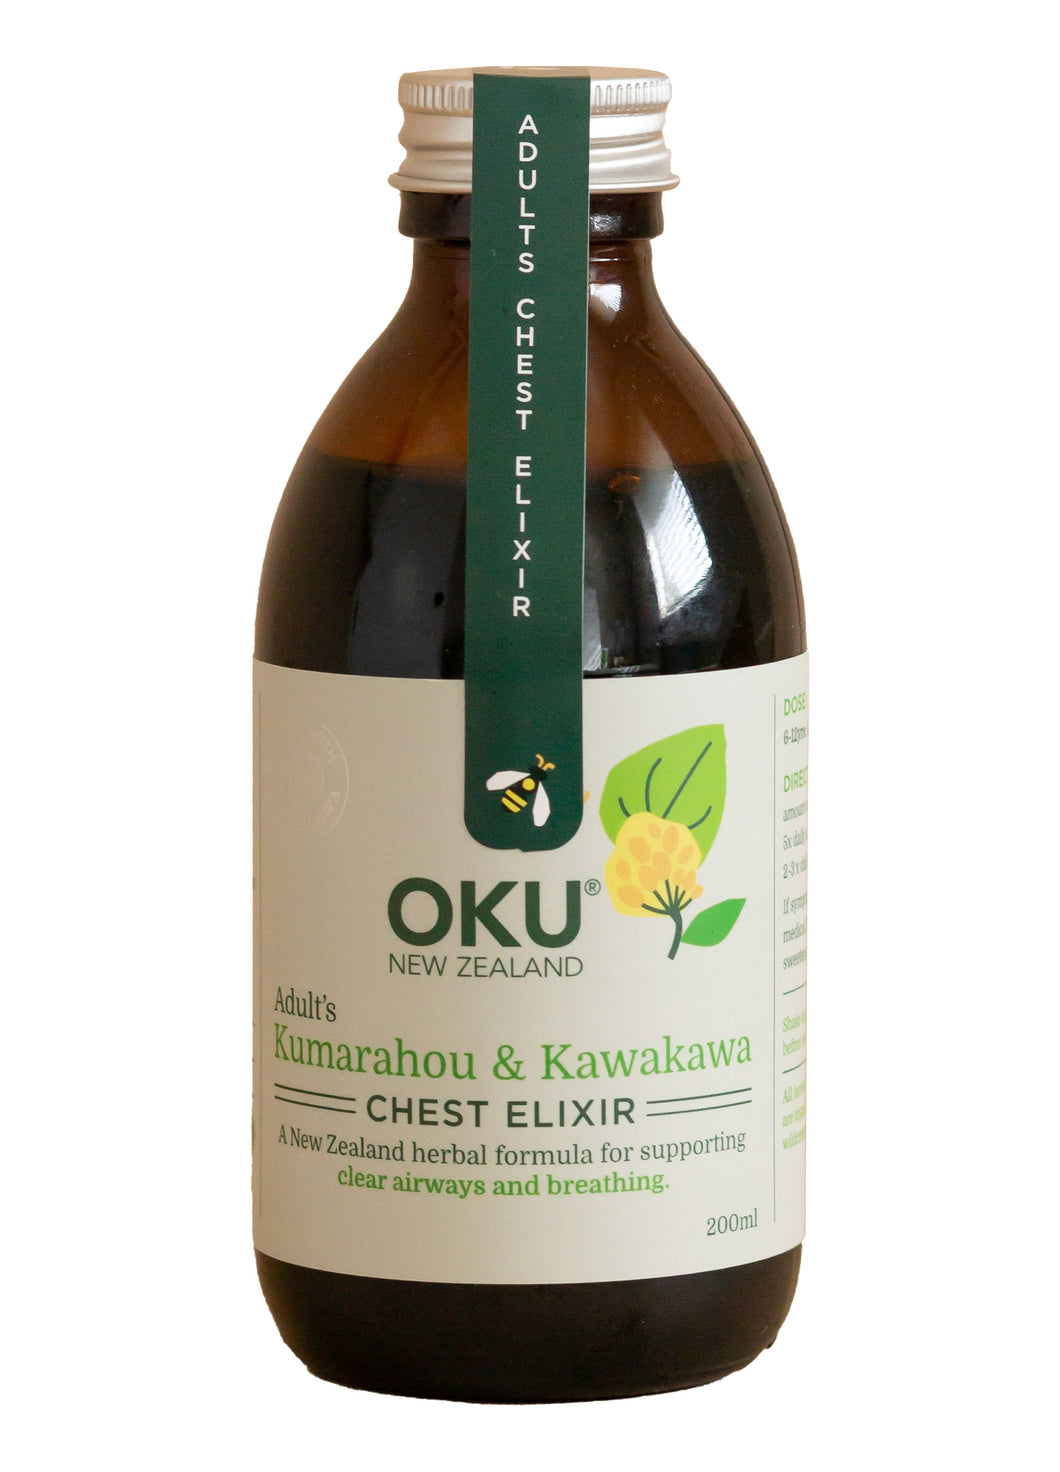 ŌKU Chest Elixir (Kumarahou & Kawakawa) 200ml - Adult's